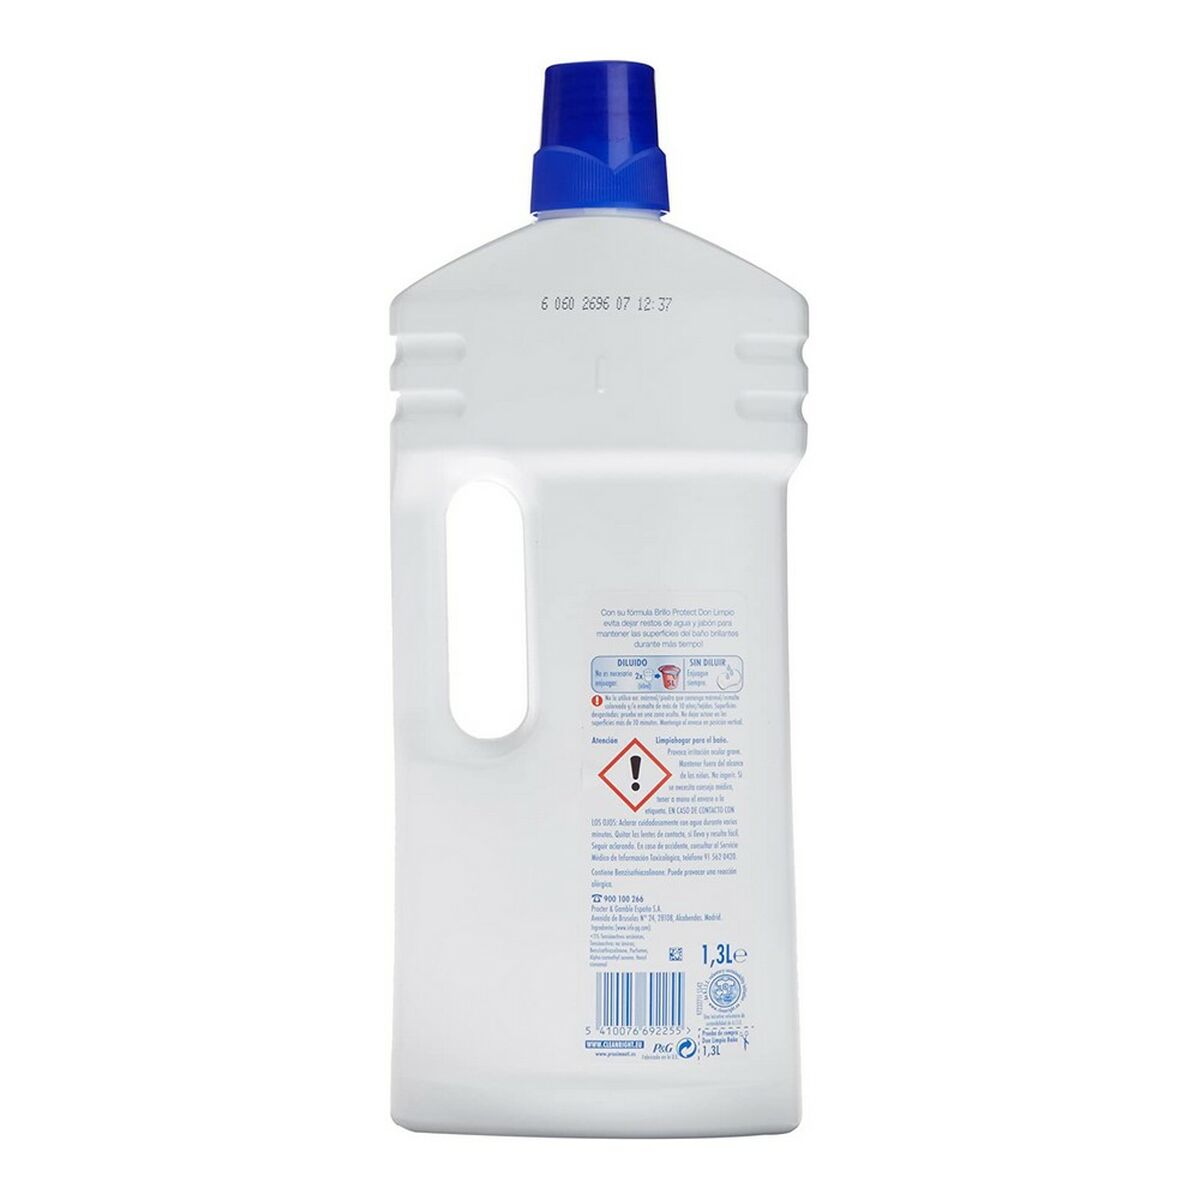 Detergente Don Limpio 5410076692255 (1,3 L)